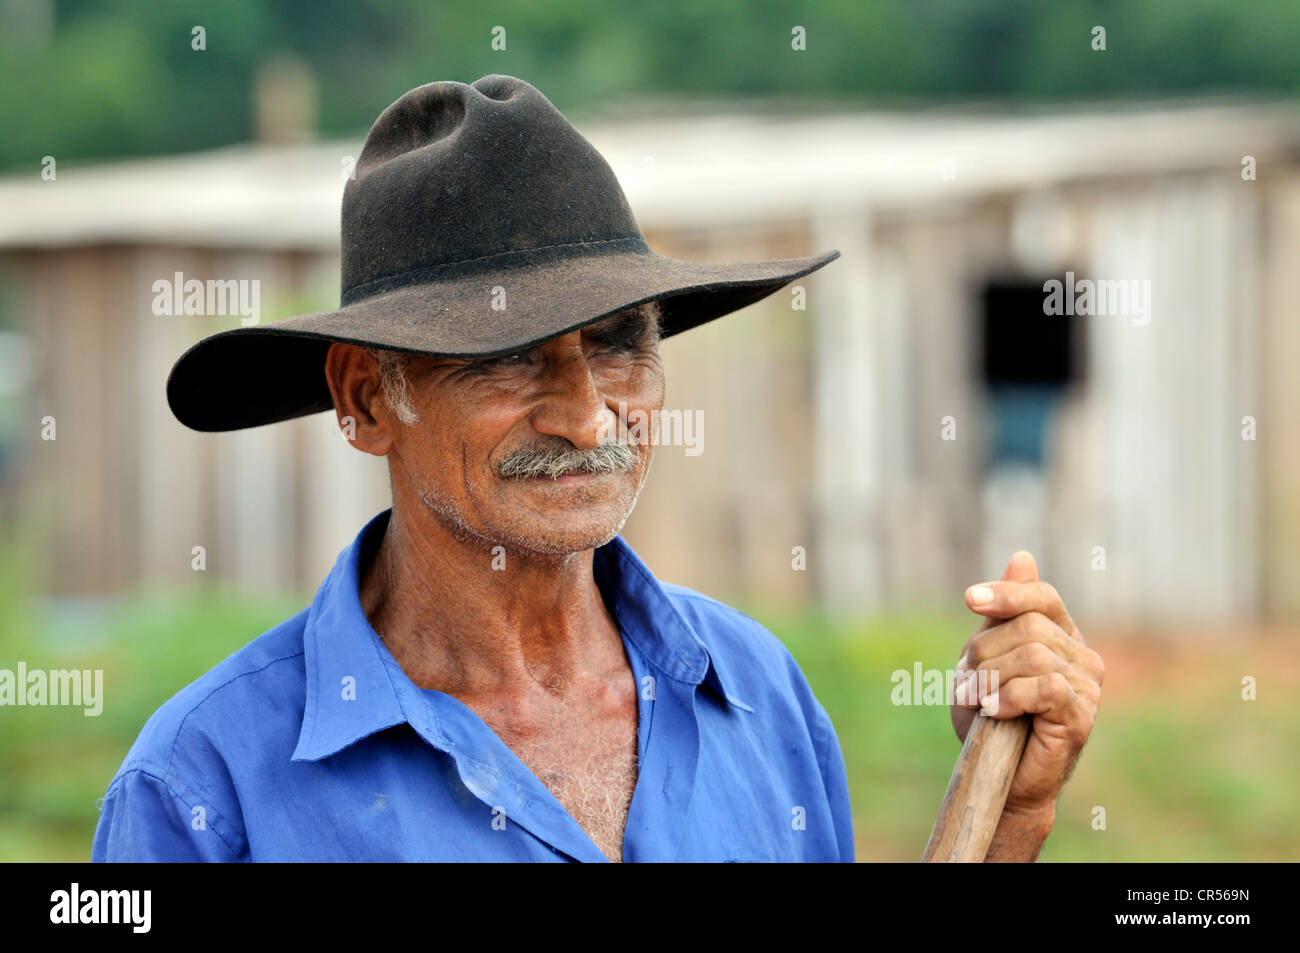 https://c8.alamy.com/comp/CR569N/farmer-wearing-a-hat-standing-in-front-of-his-hut-acampamento-12-de-CR569N.jpg